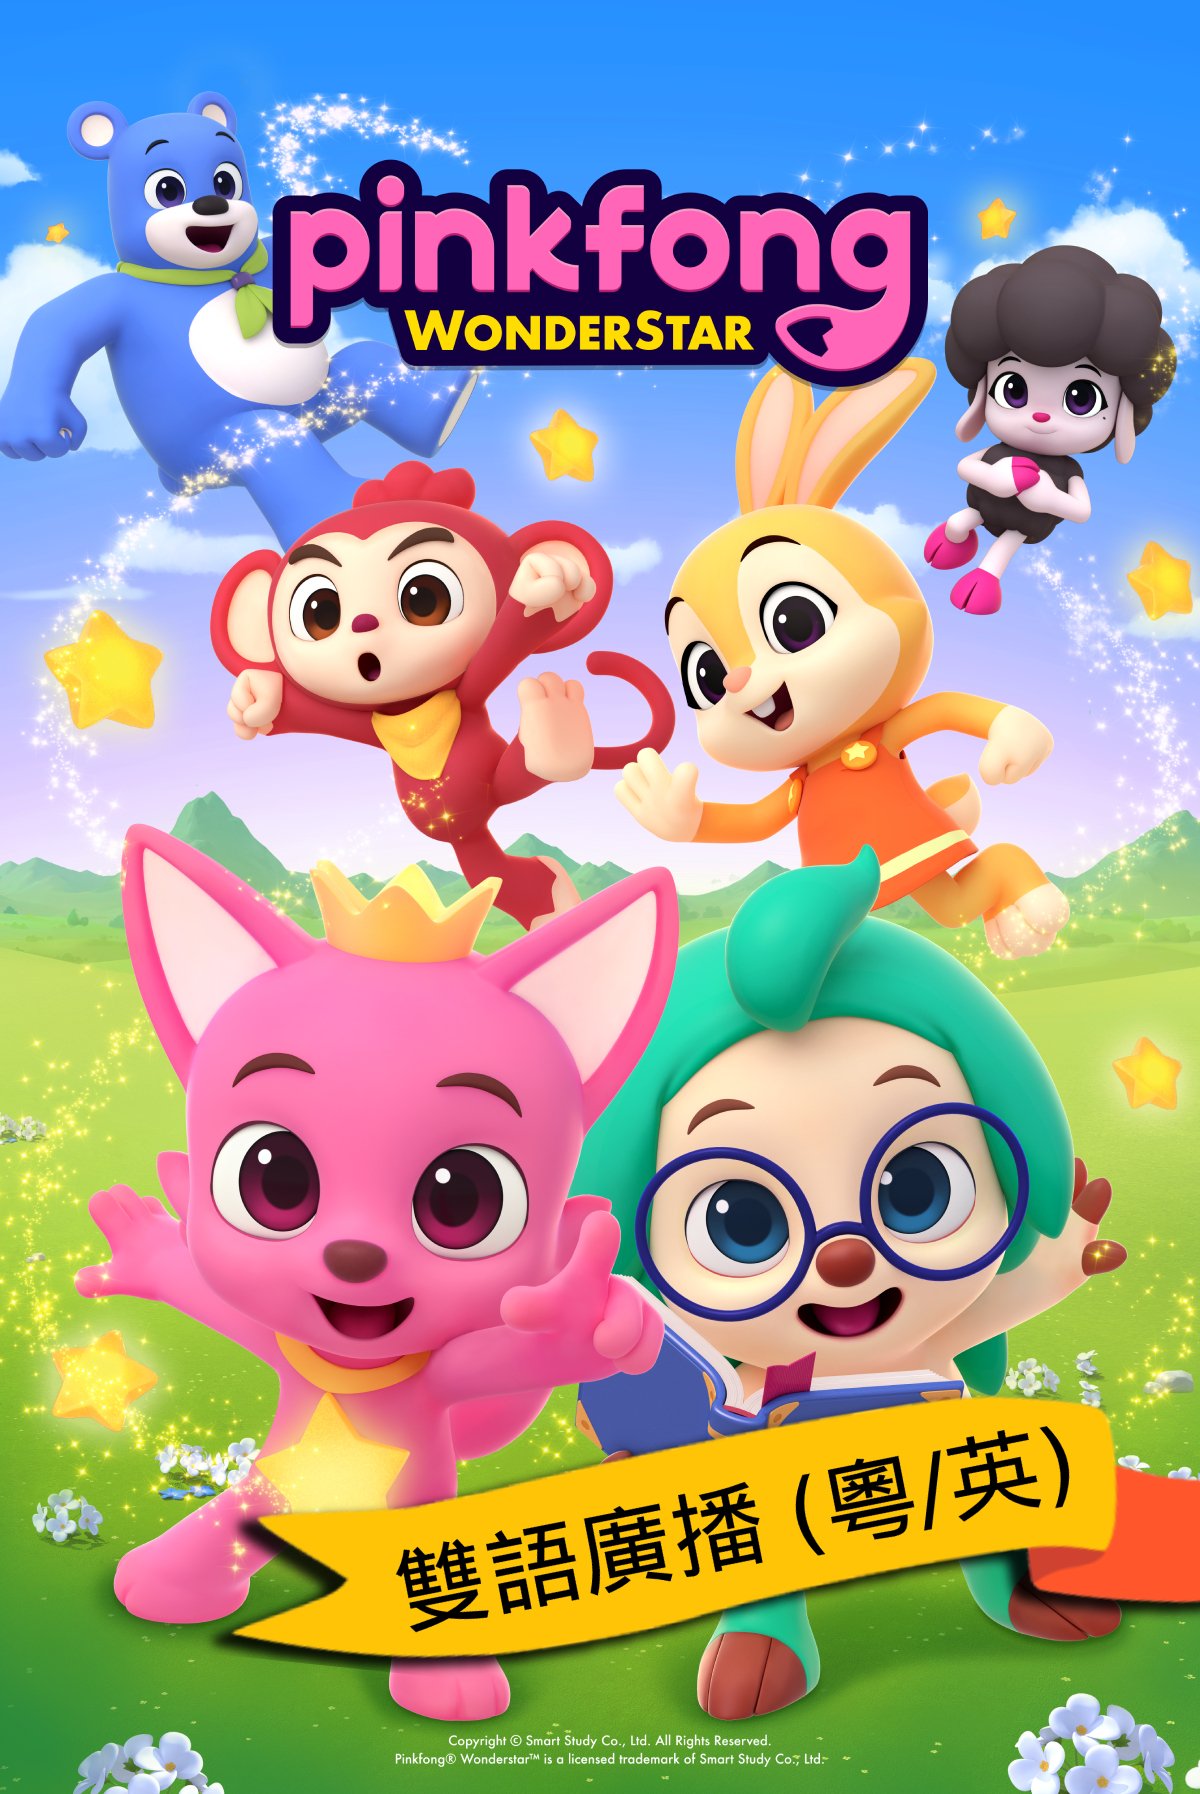 Now Player - On Demand > Pinkfong Wonderstar (Bilingual) S1
